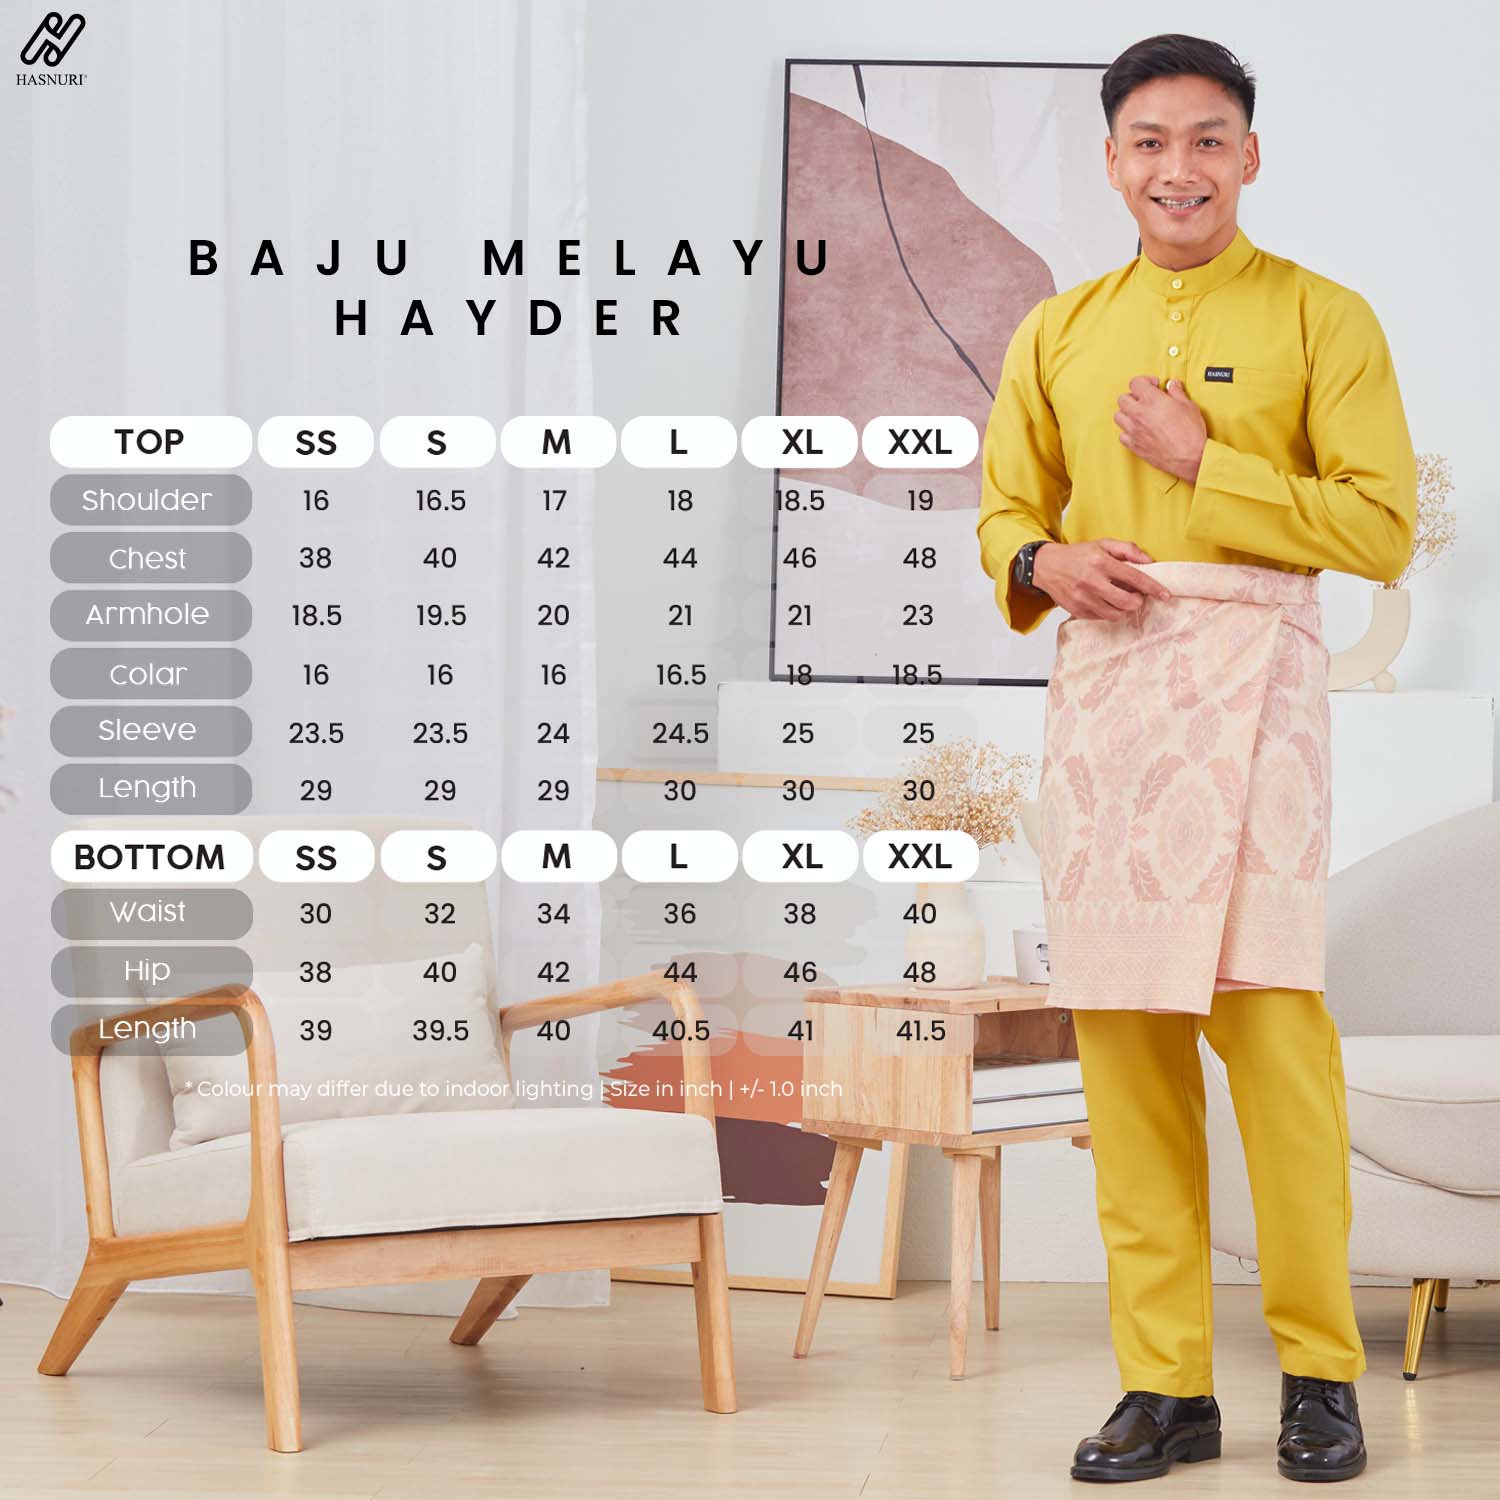 Baju Melayu Hayder - Light Grey